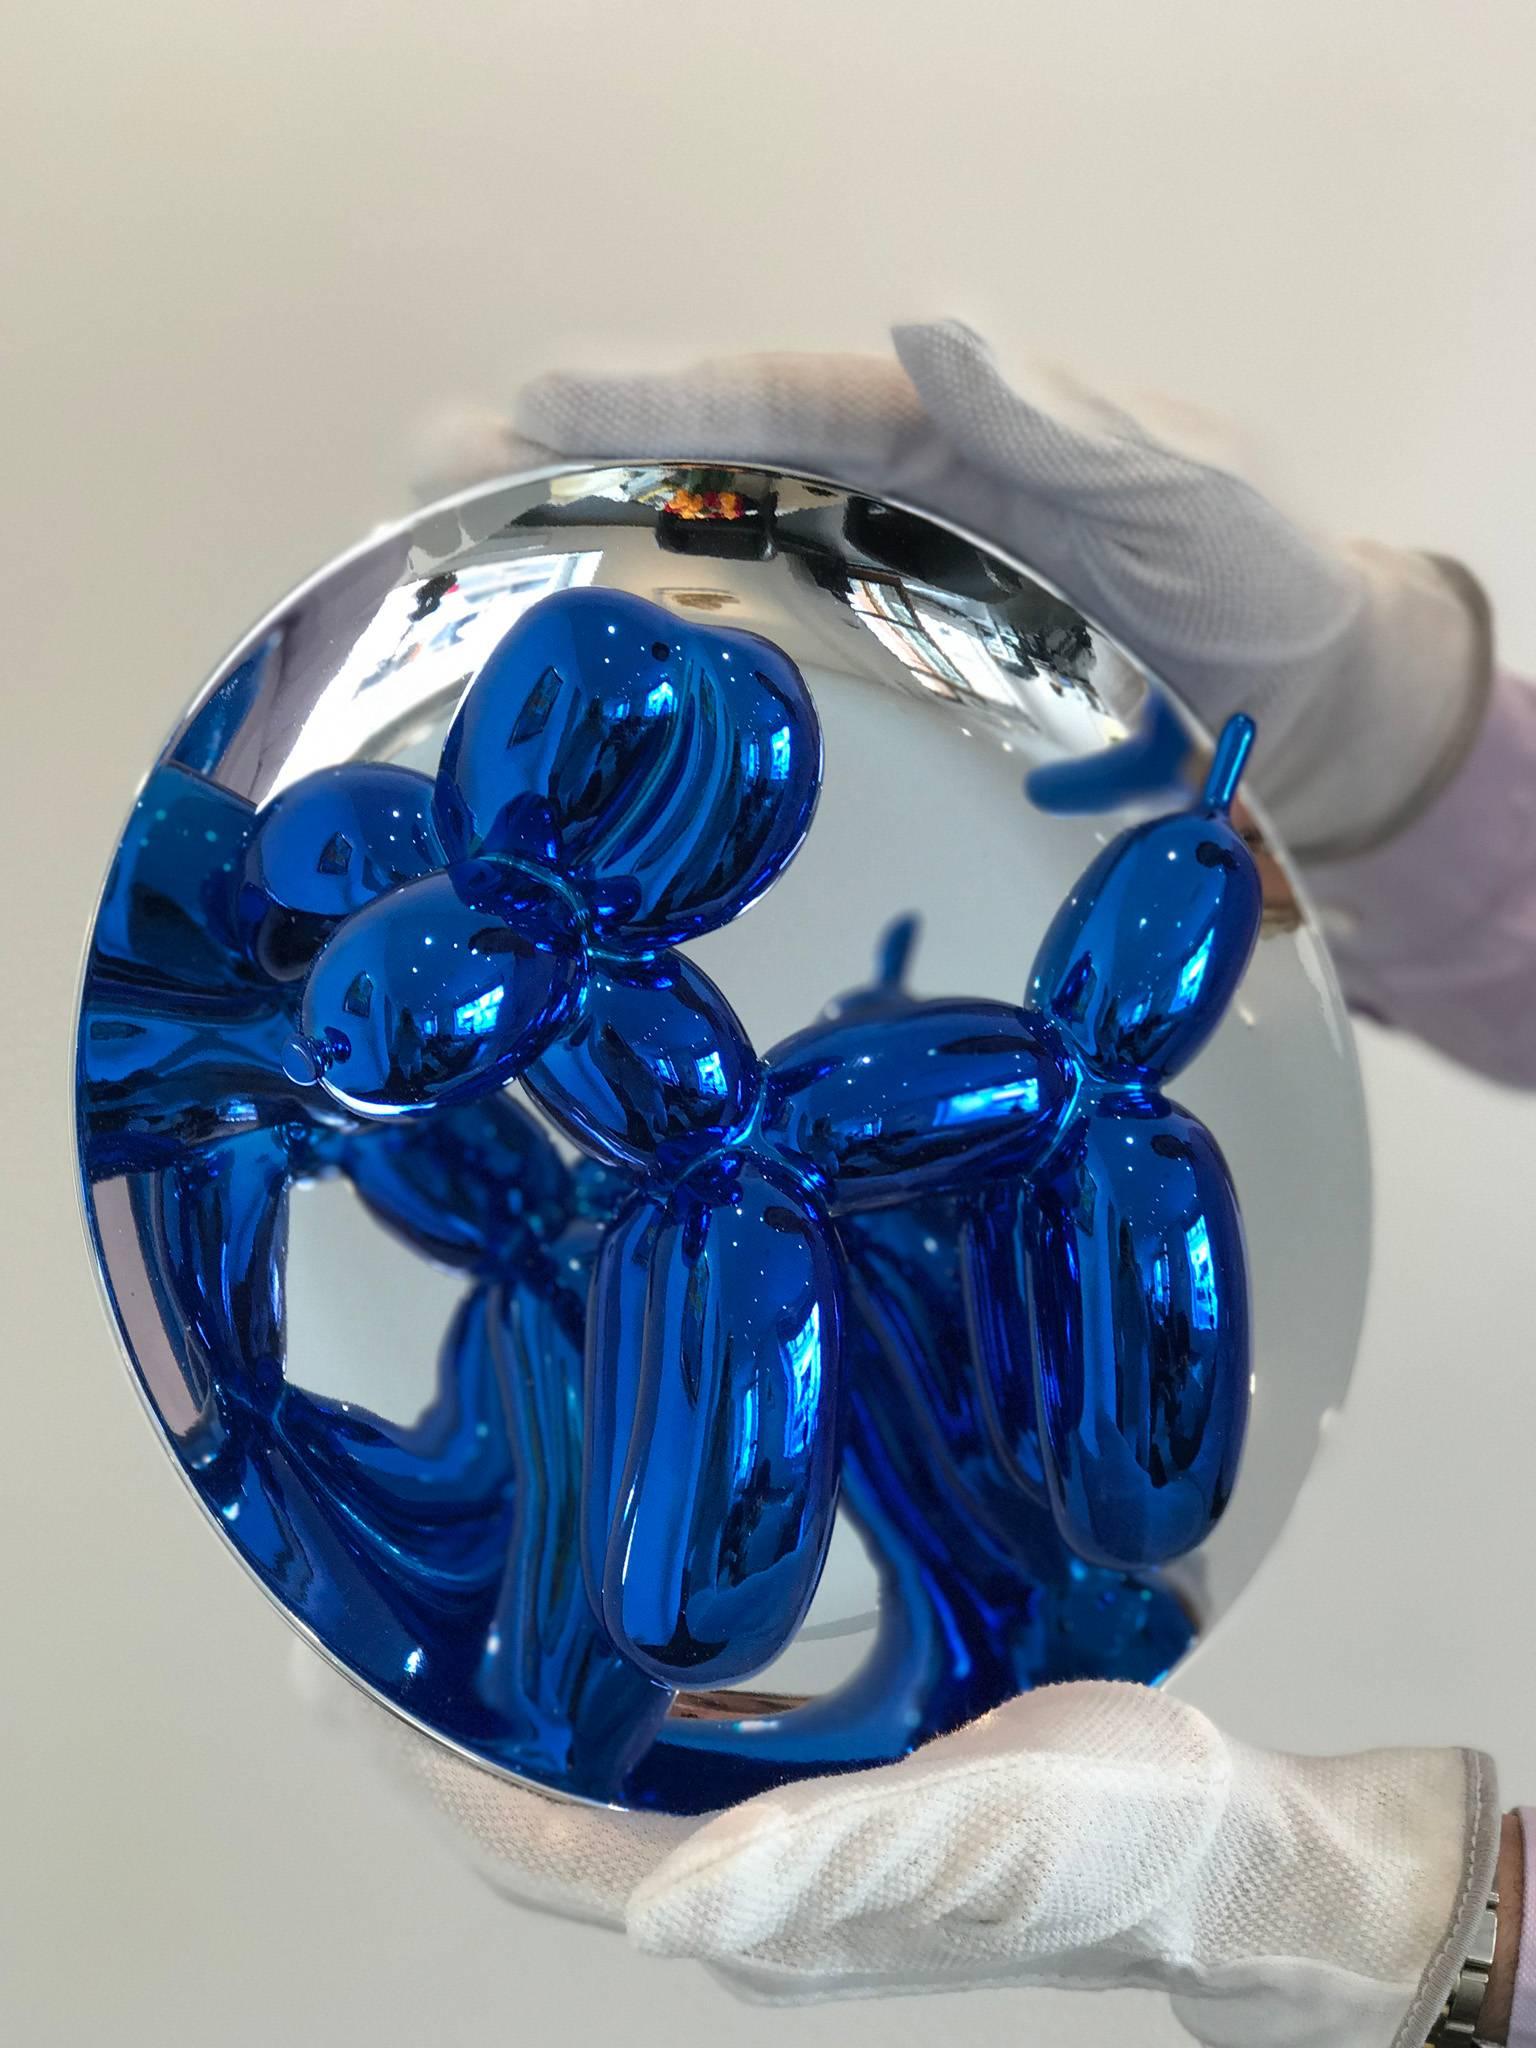 Balloon Dog (Blue) - Sculpture by Jeff Koons